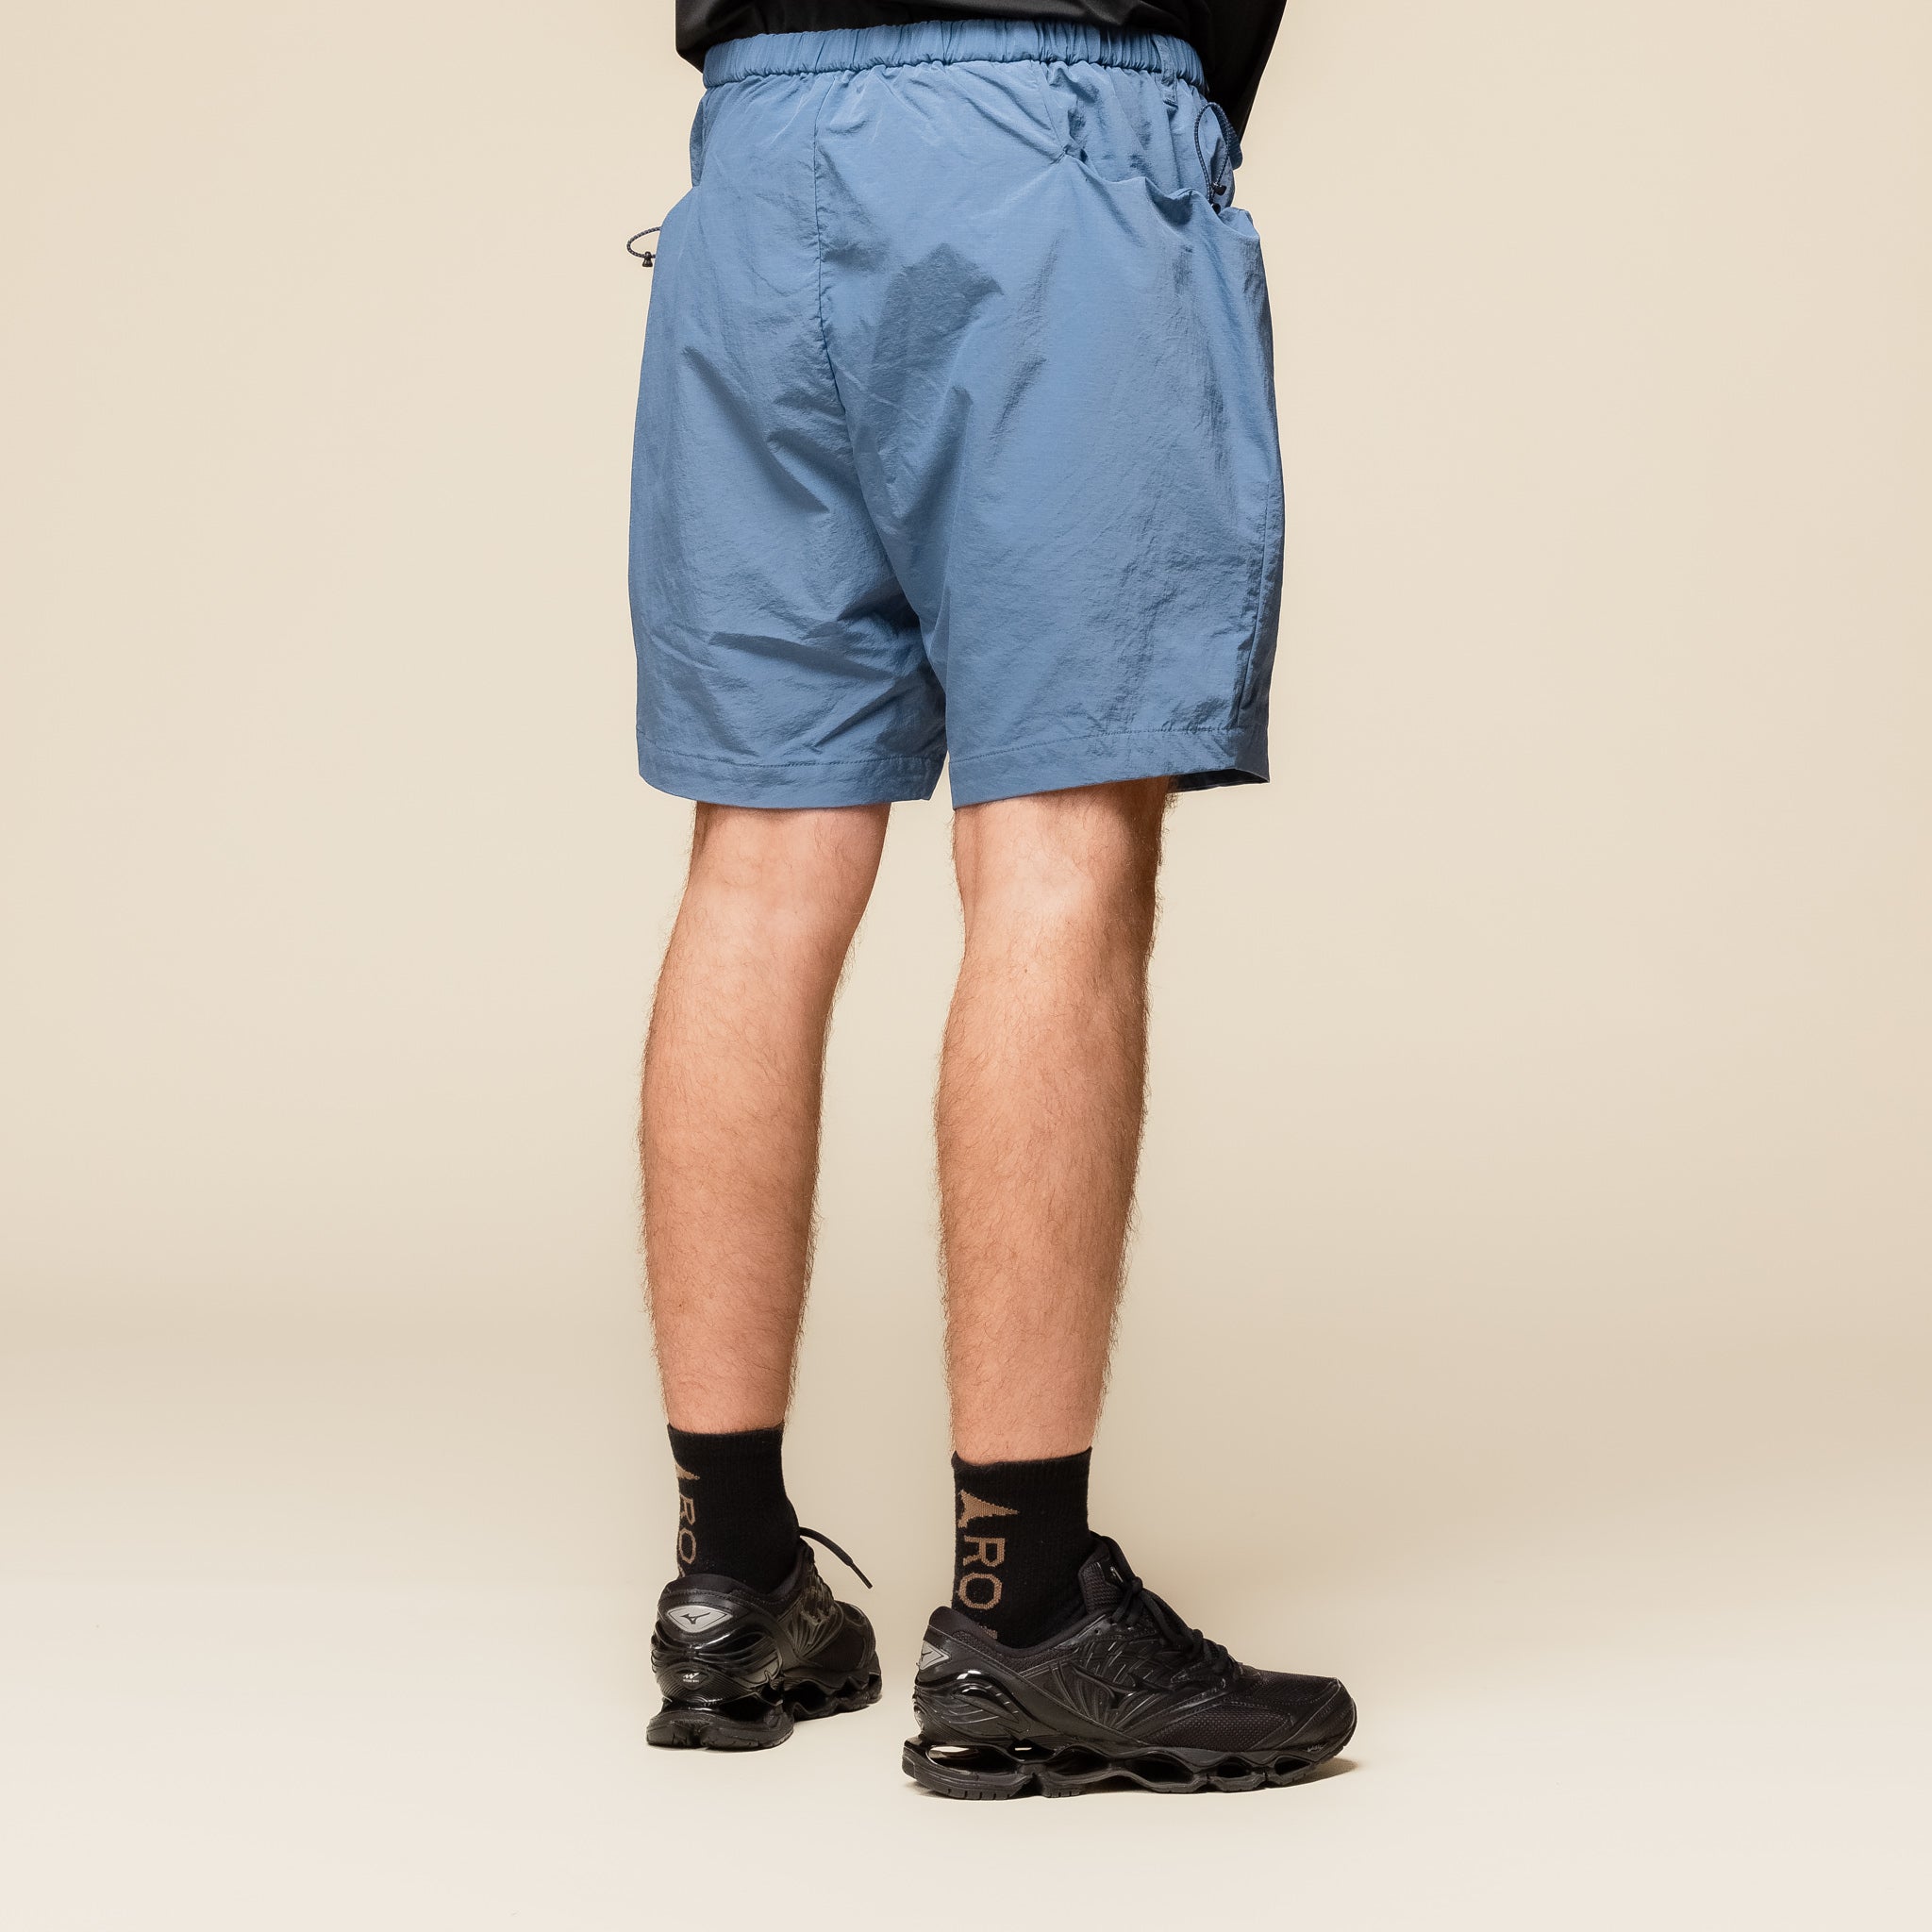 CMF Outdoor Garment - Activity Shorts - Light Blue